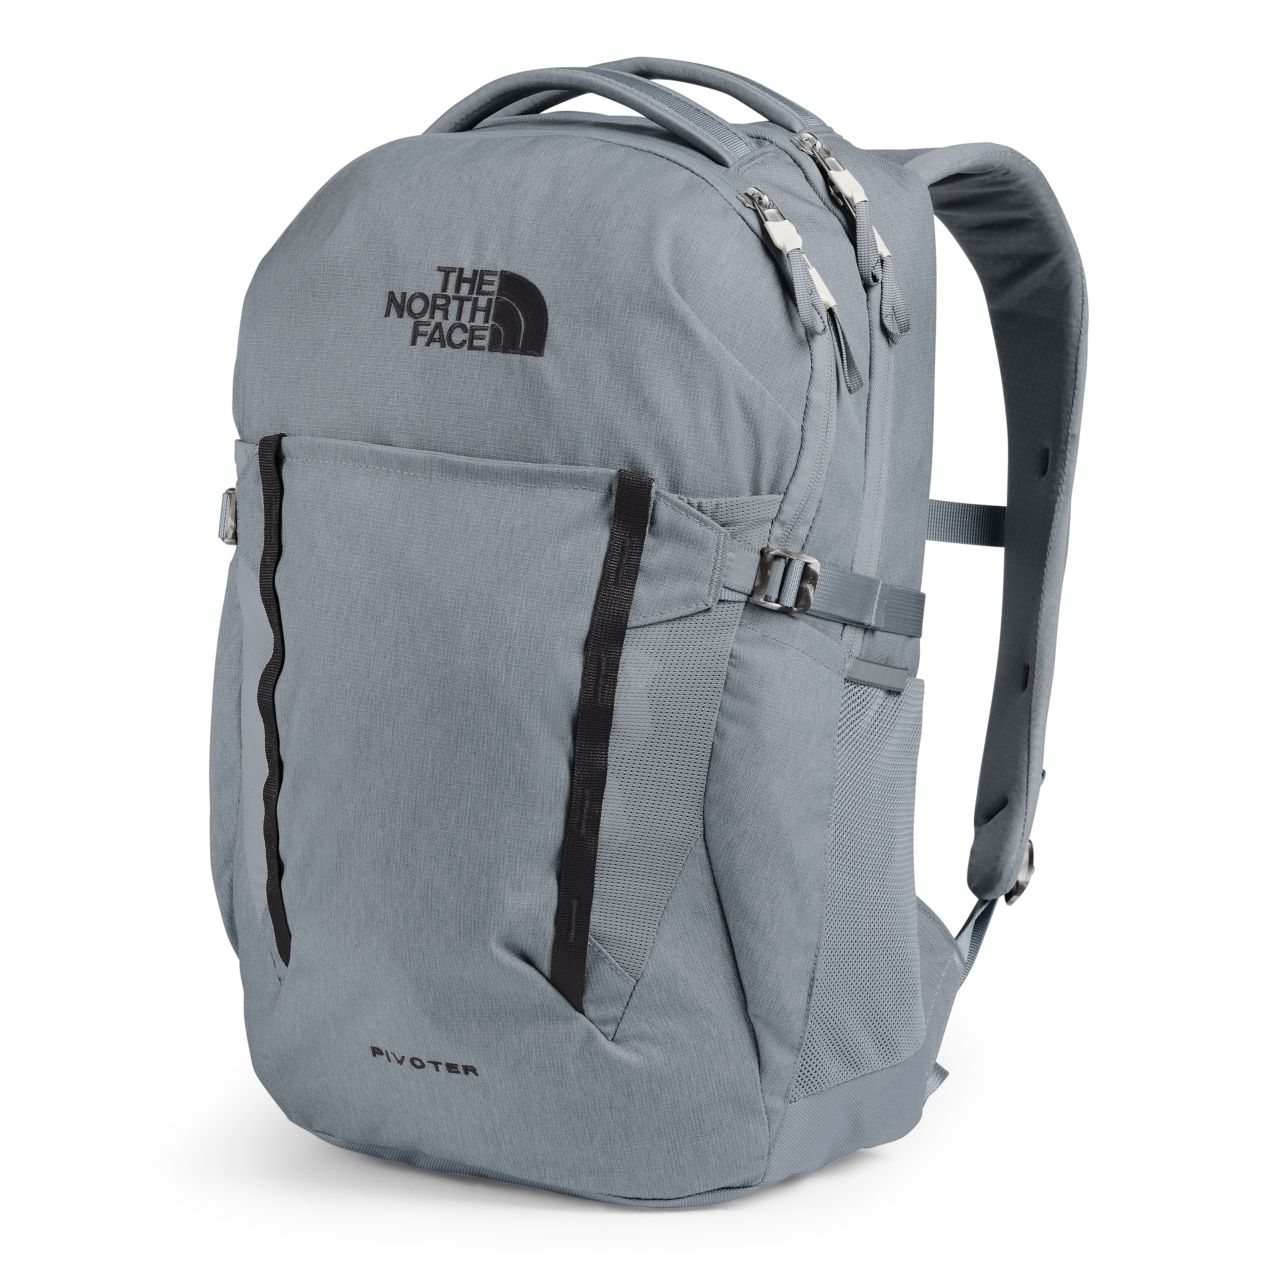 Pas op Aap niettemin The North Face Pivoter | Laptop Packs & Bags | BackcountryGear.com